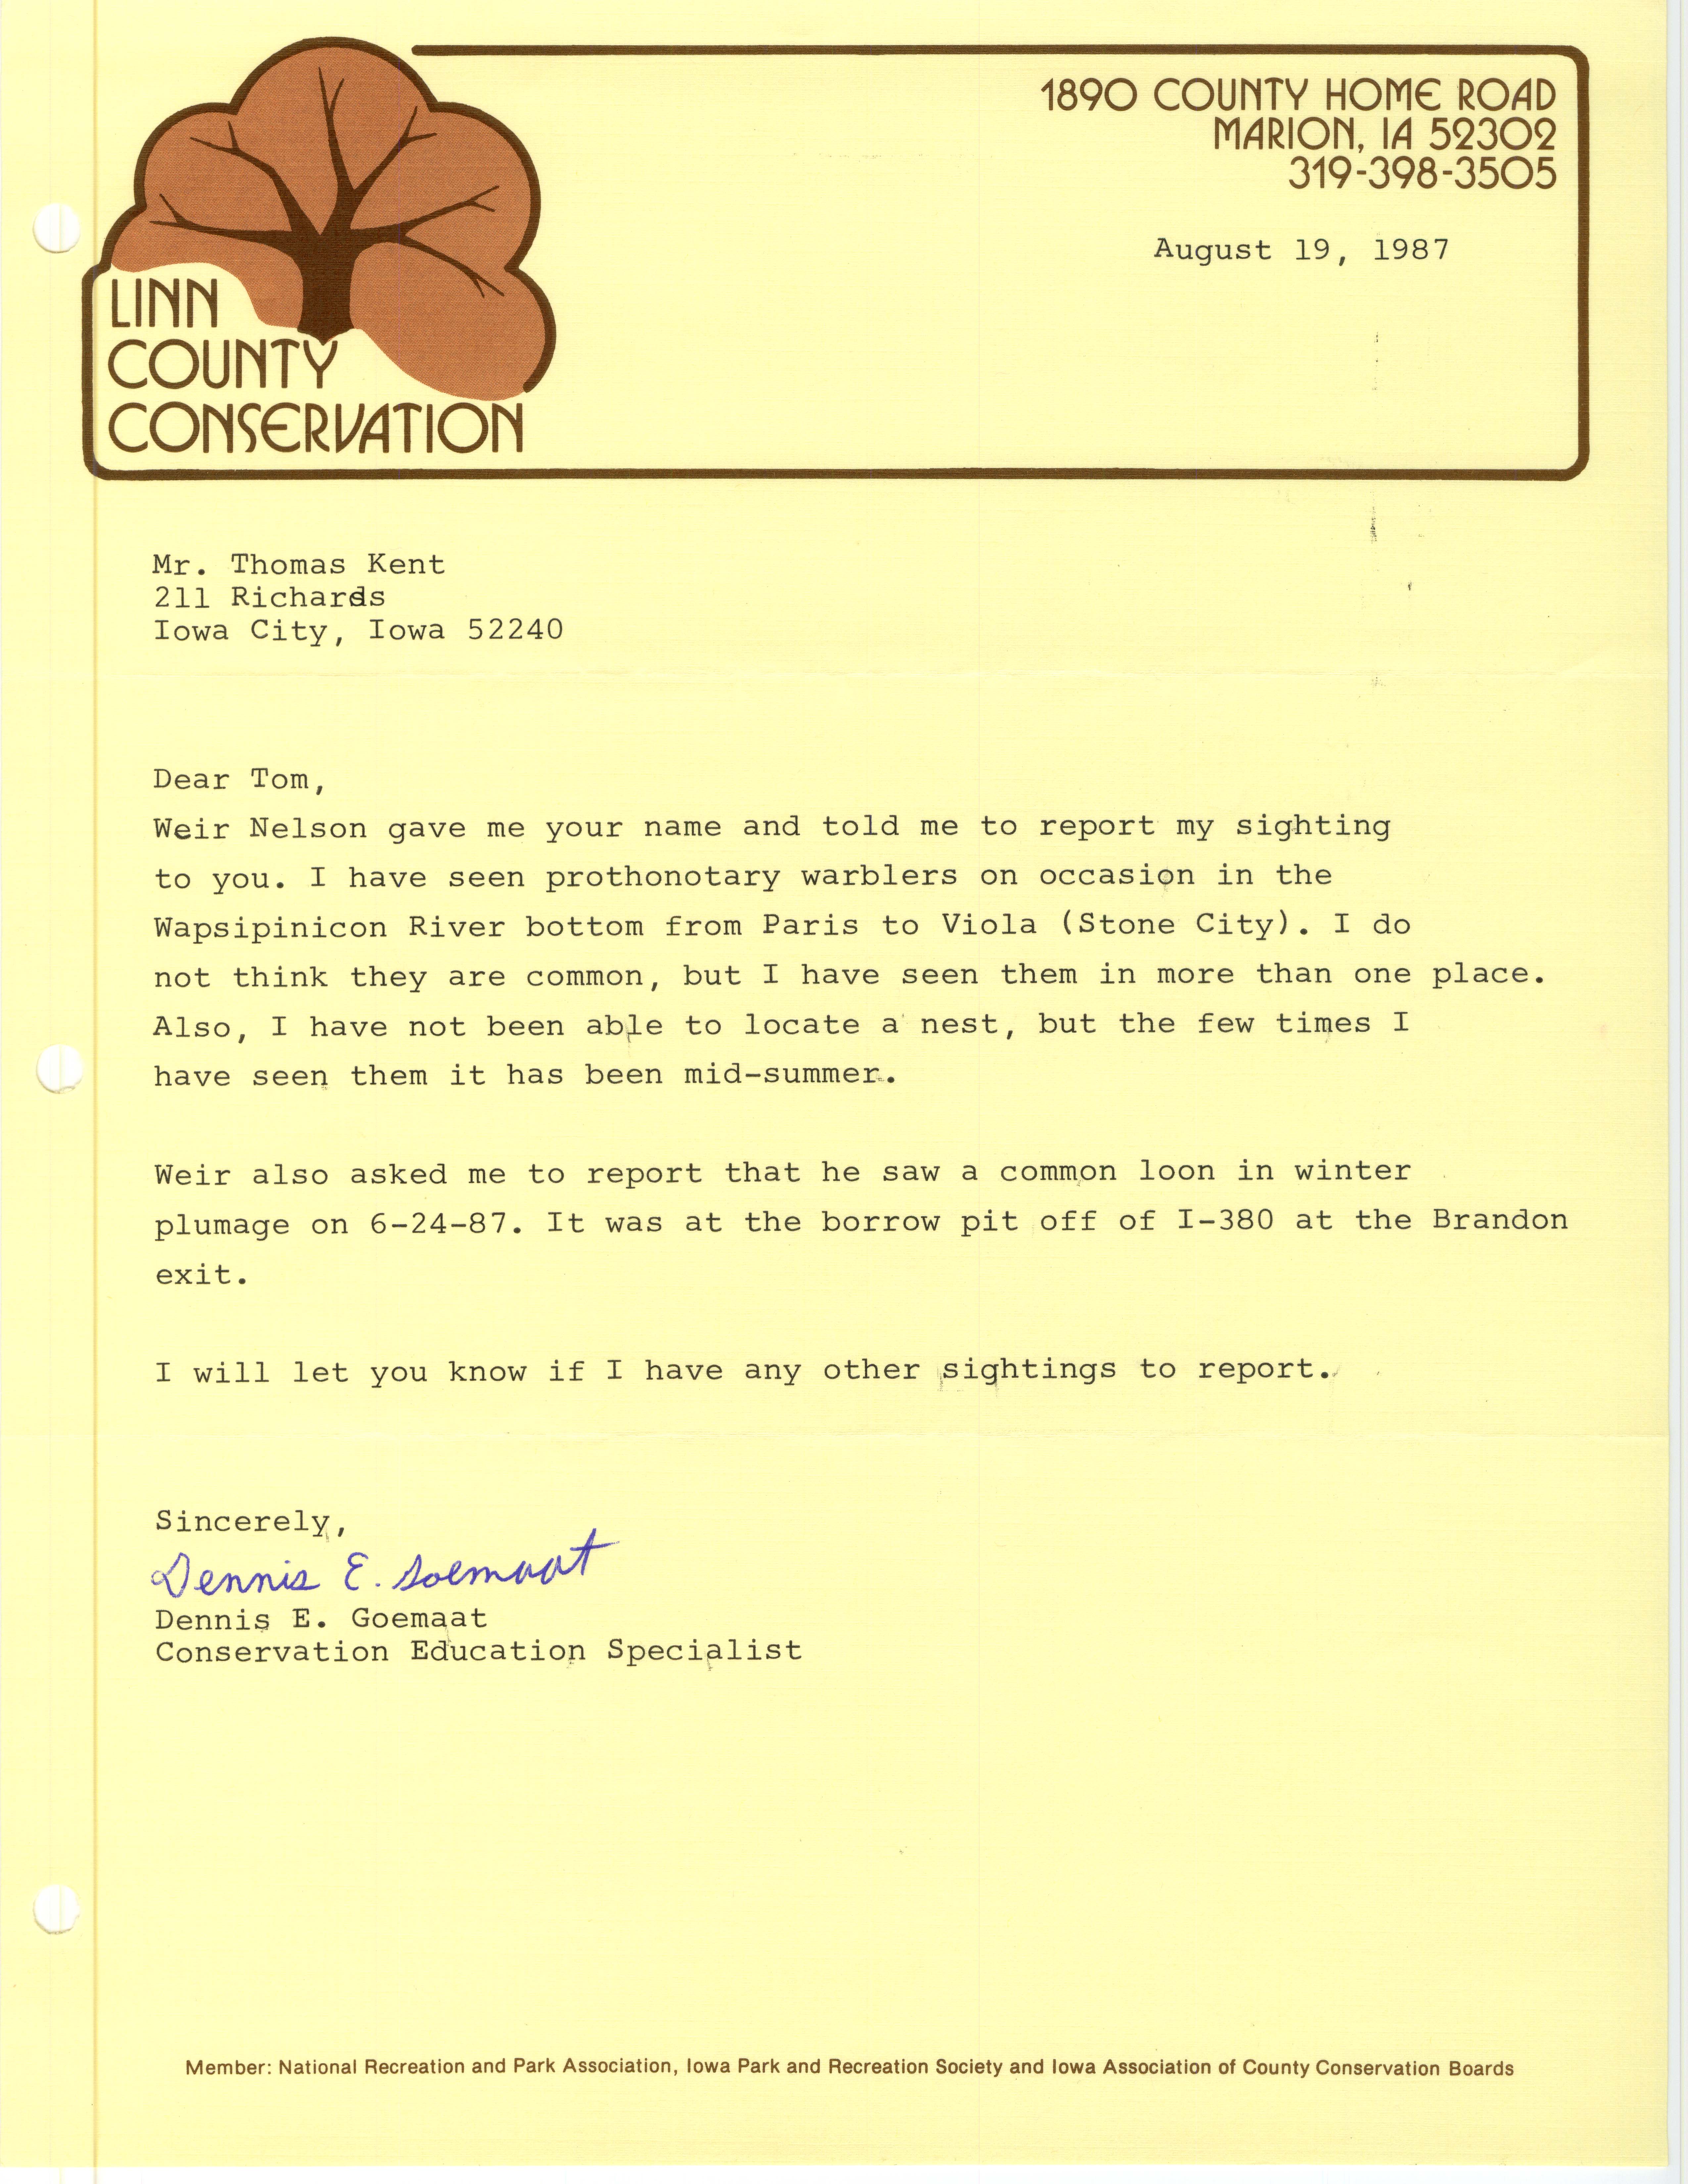 Dennis E. Goemaat letter to Thomas H. Kent regarding Prothonotary Warbler sightings, August 19, 1987